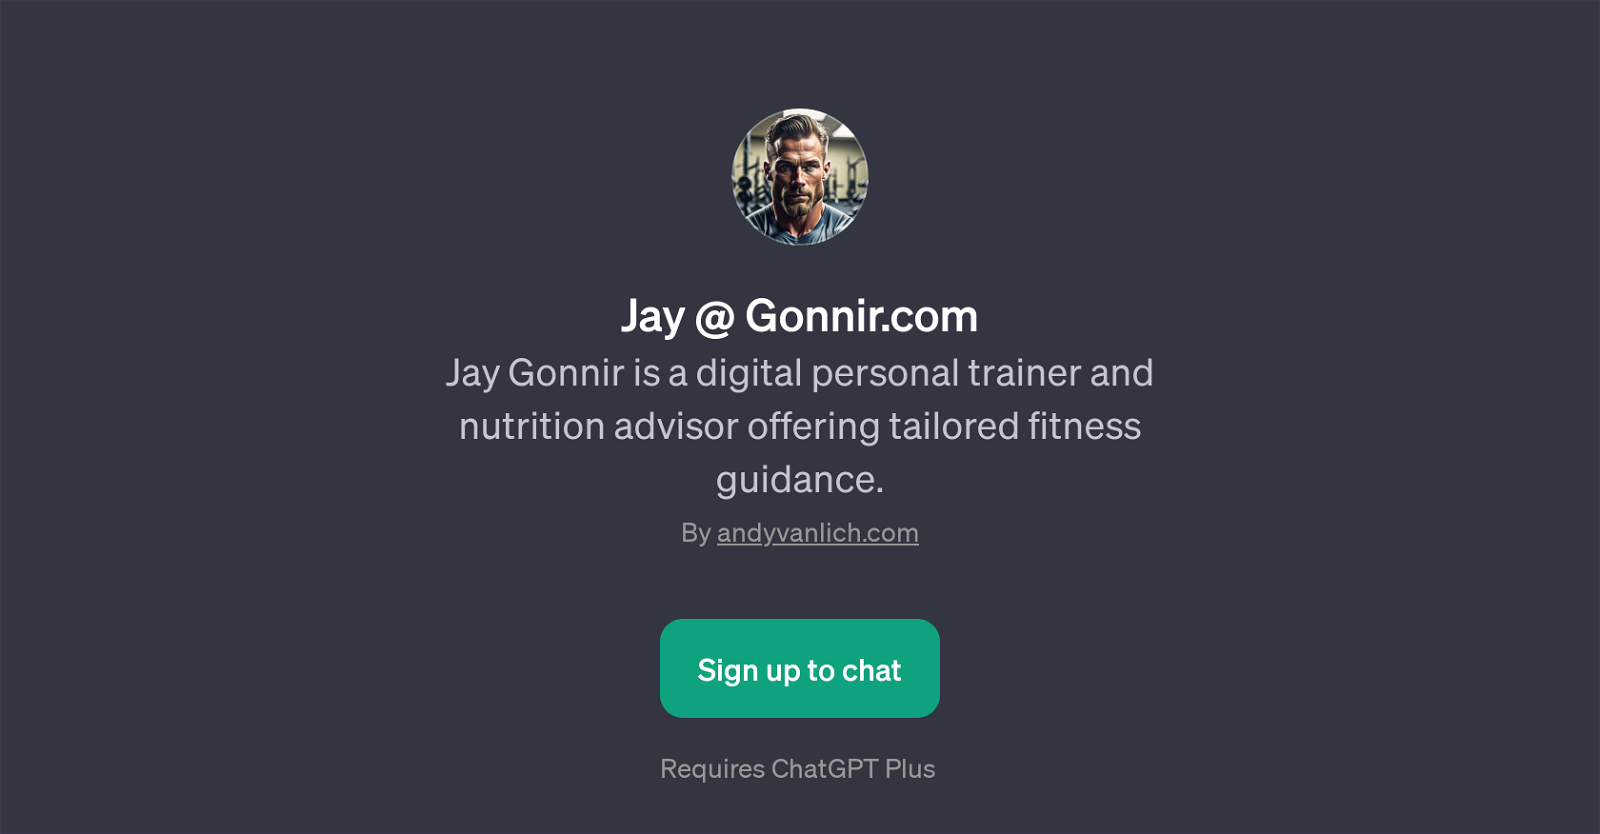 Jay @ Gonnir.com website